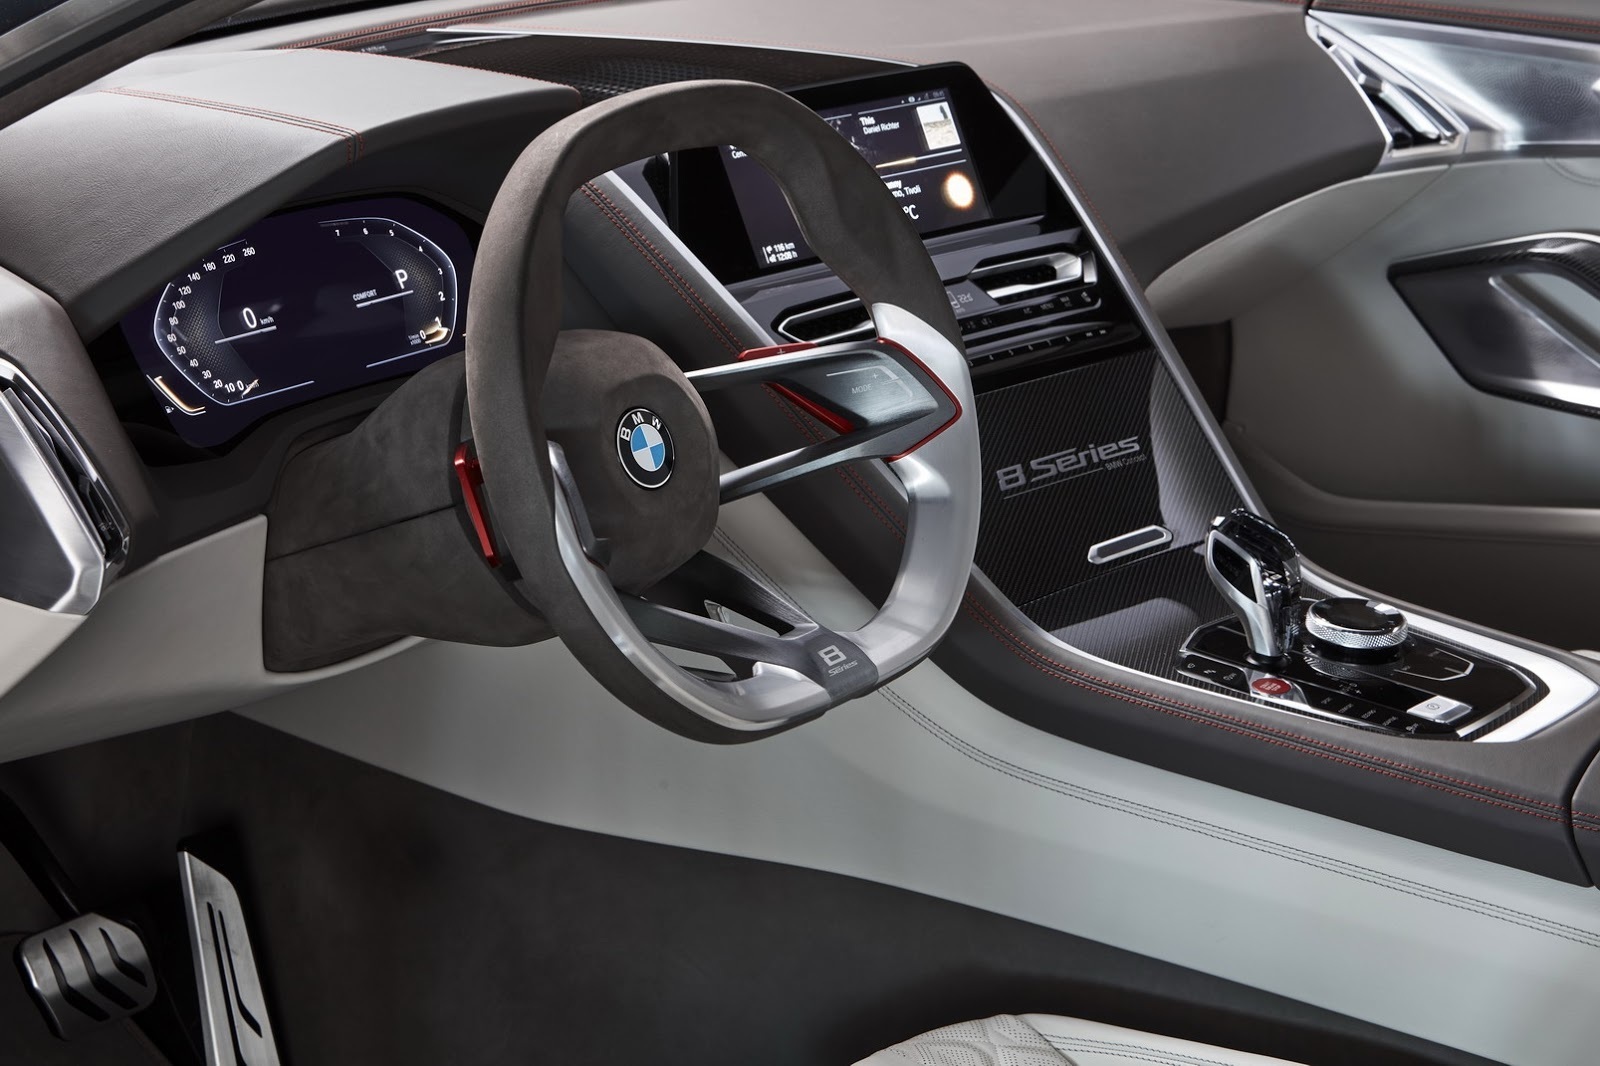 BMW 8 Series Concept